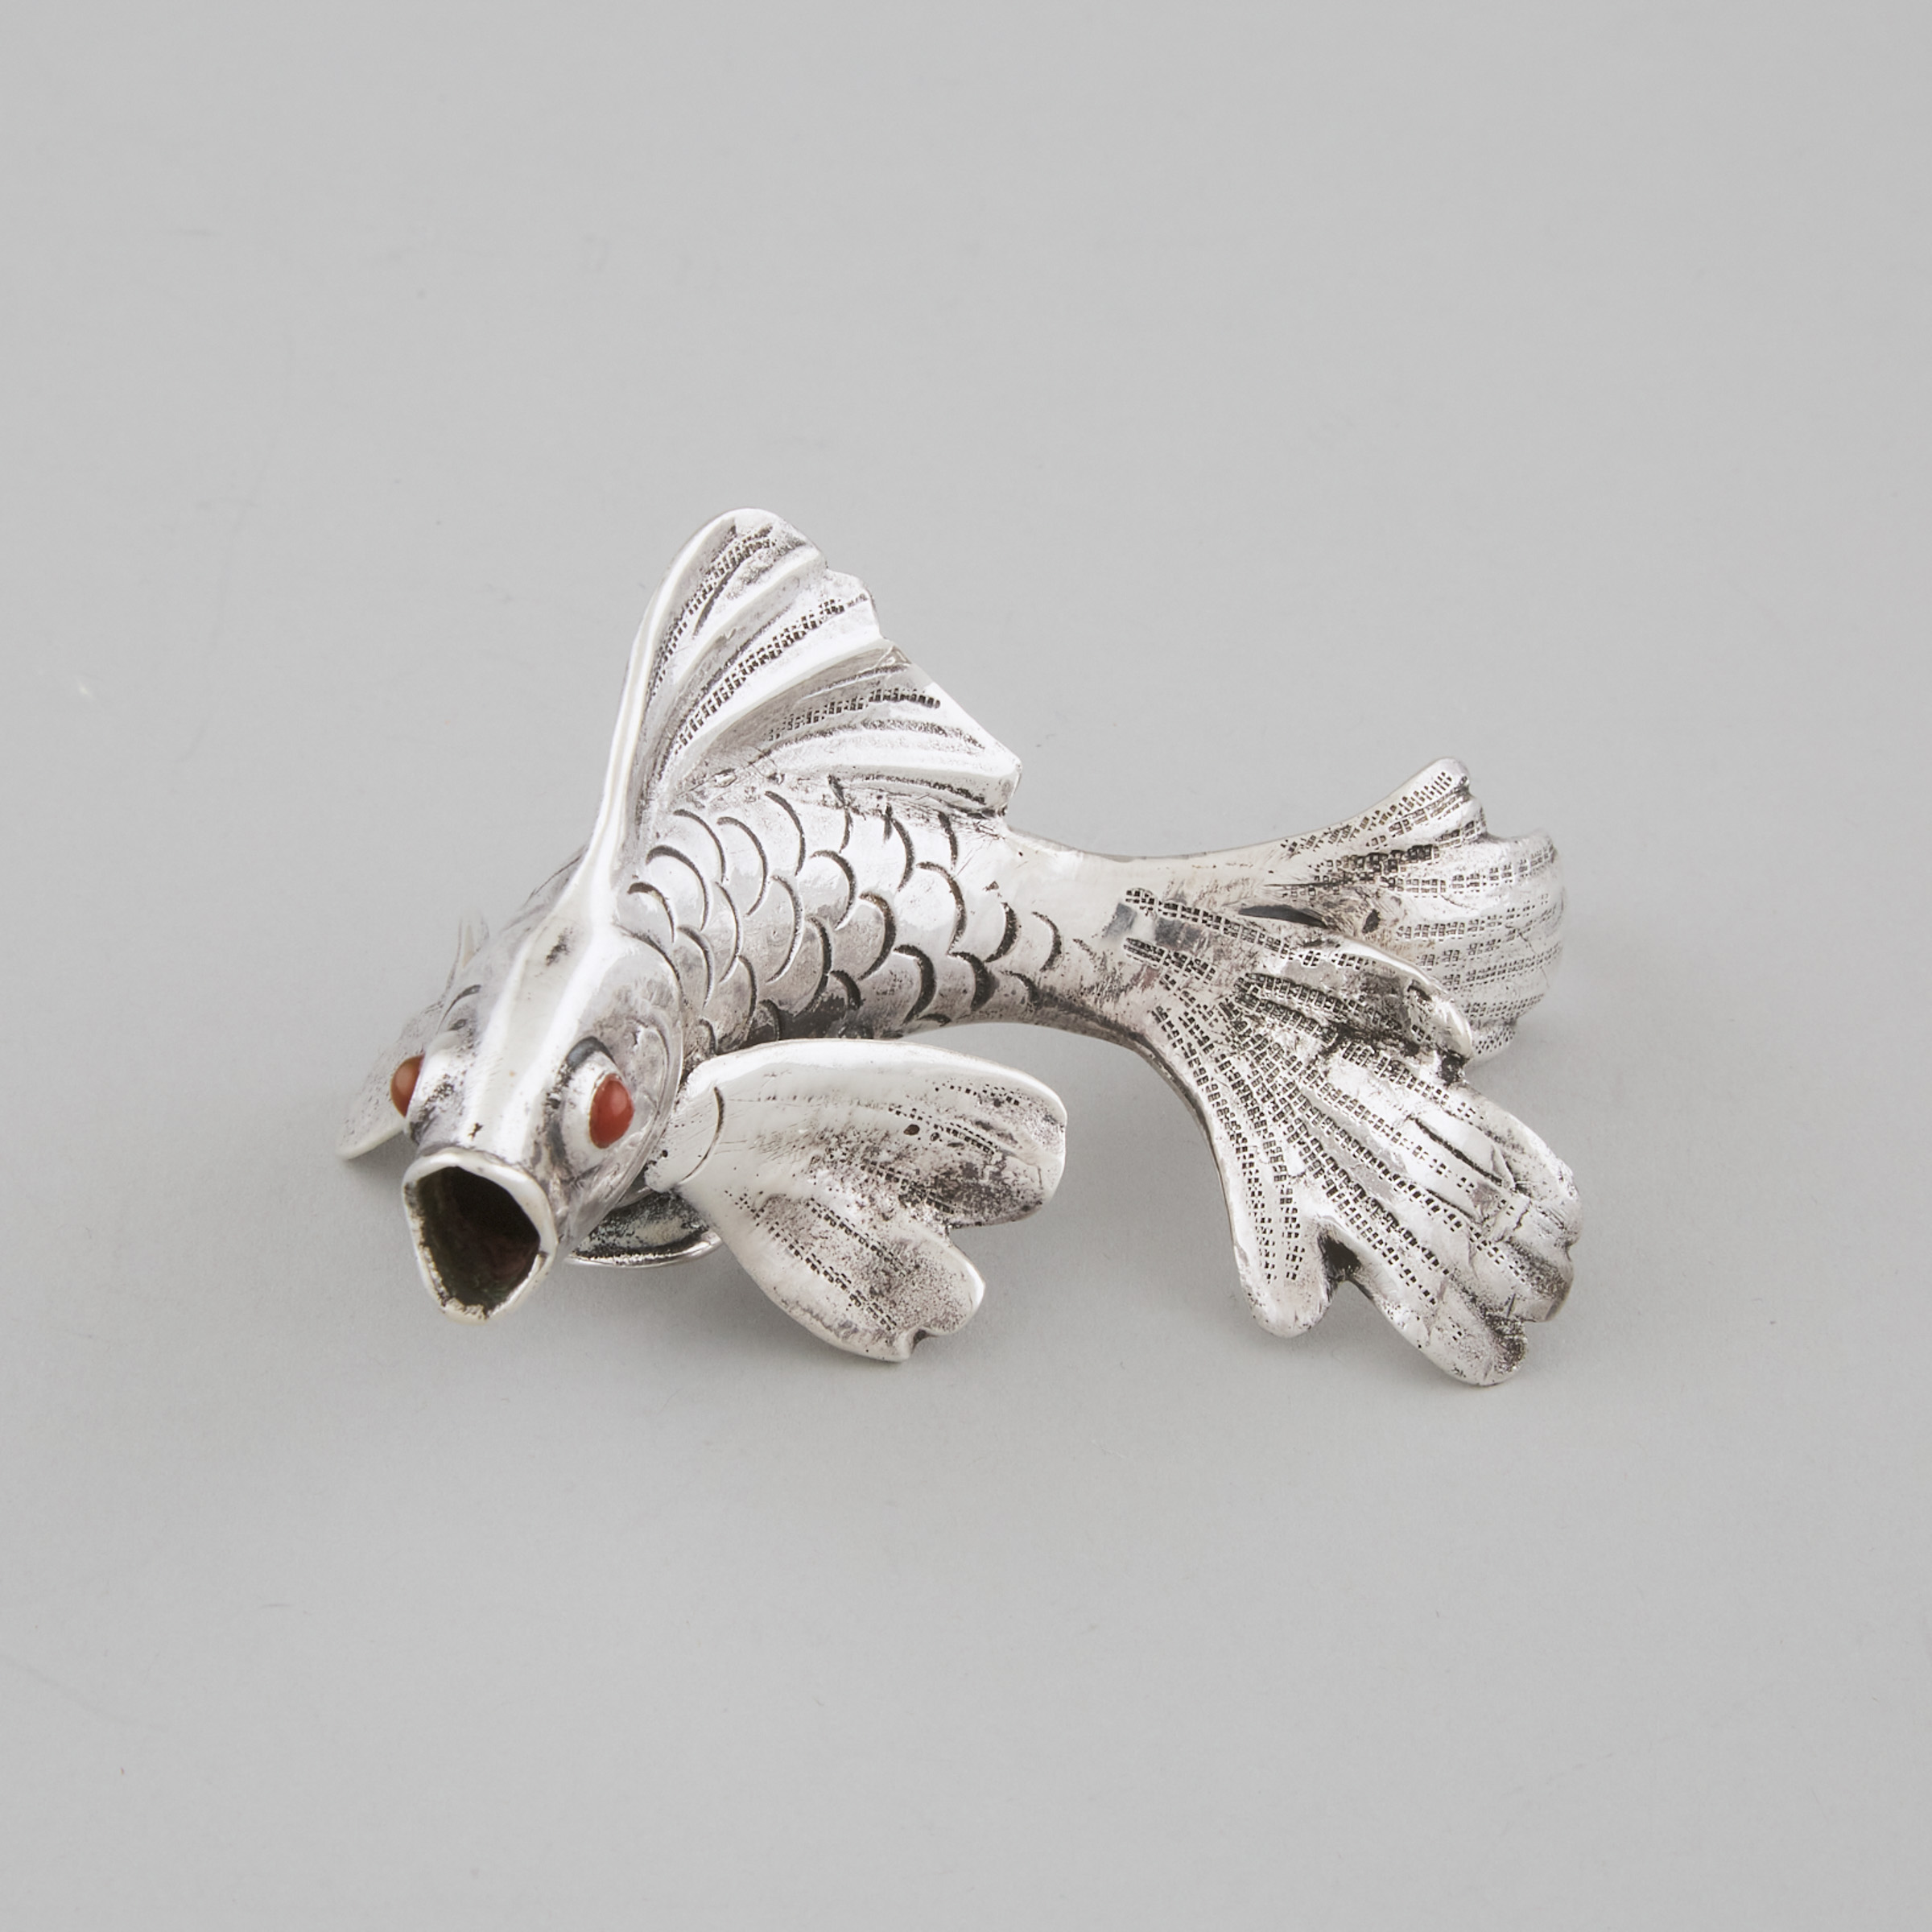 Italian Silver Model of a Fish, Buccellati, Milan, 20th century